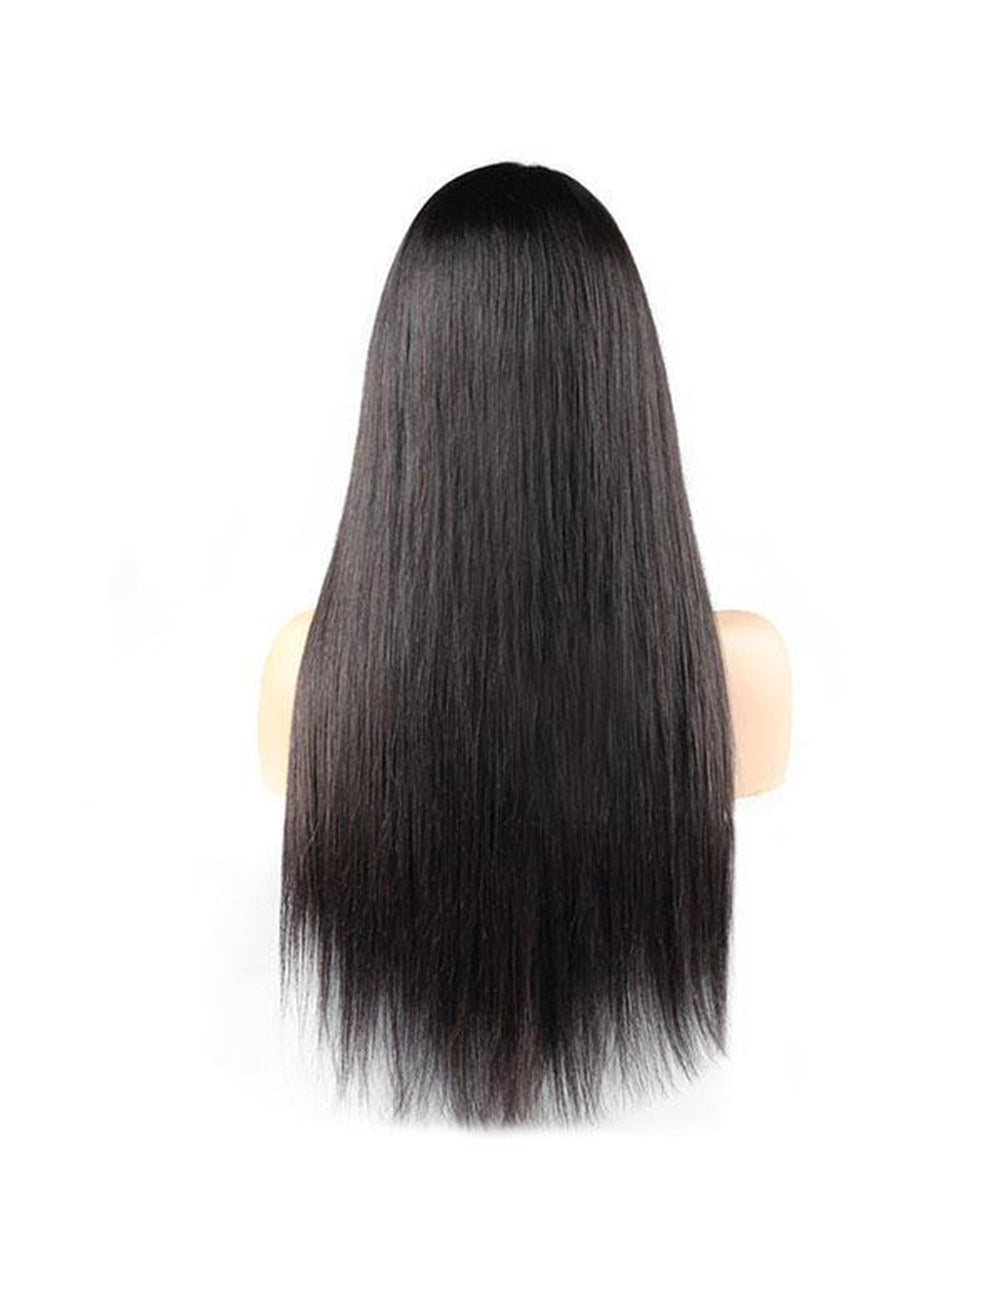 4x4 Lace Closure Wig Straight Hair Wig 250% Density 30 Inch Brazilian Human Hair Wig